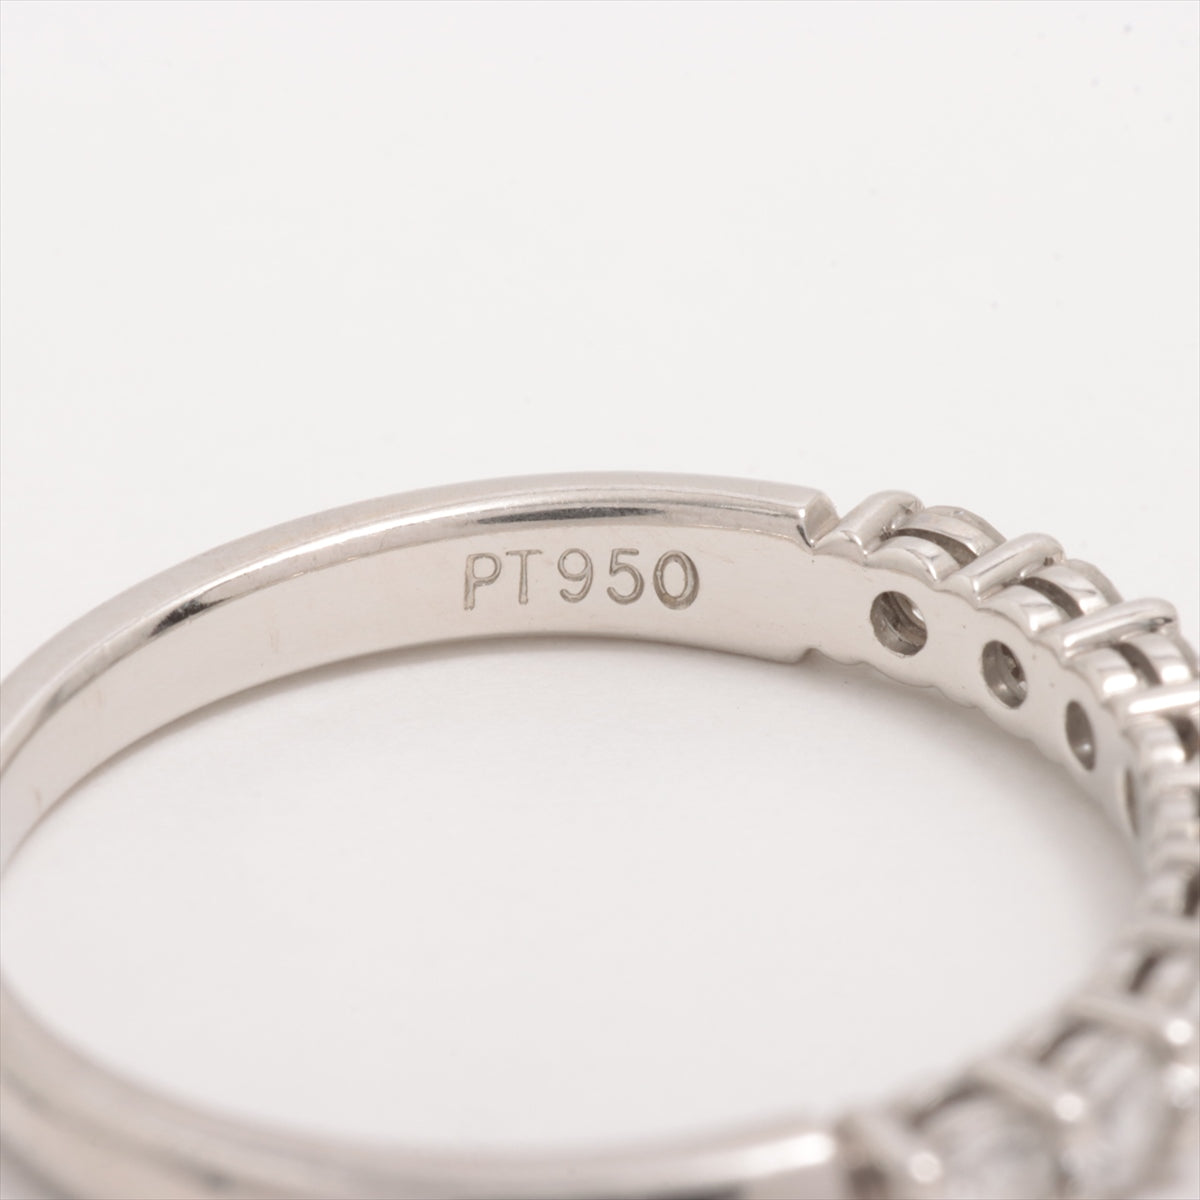 Tiffany Embrace diamond Ring Pt950 2.4g